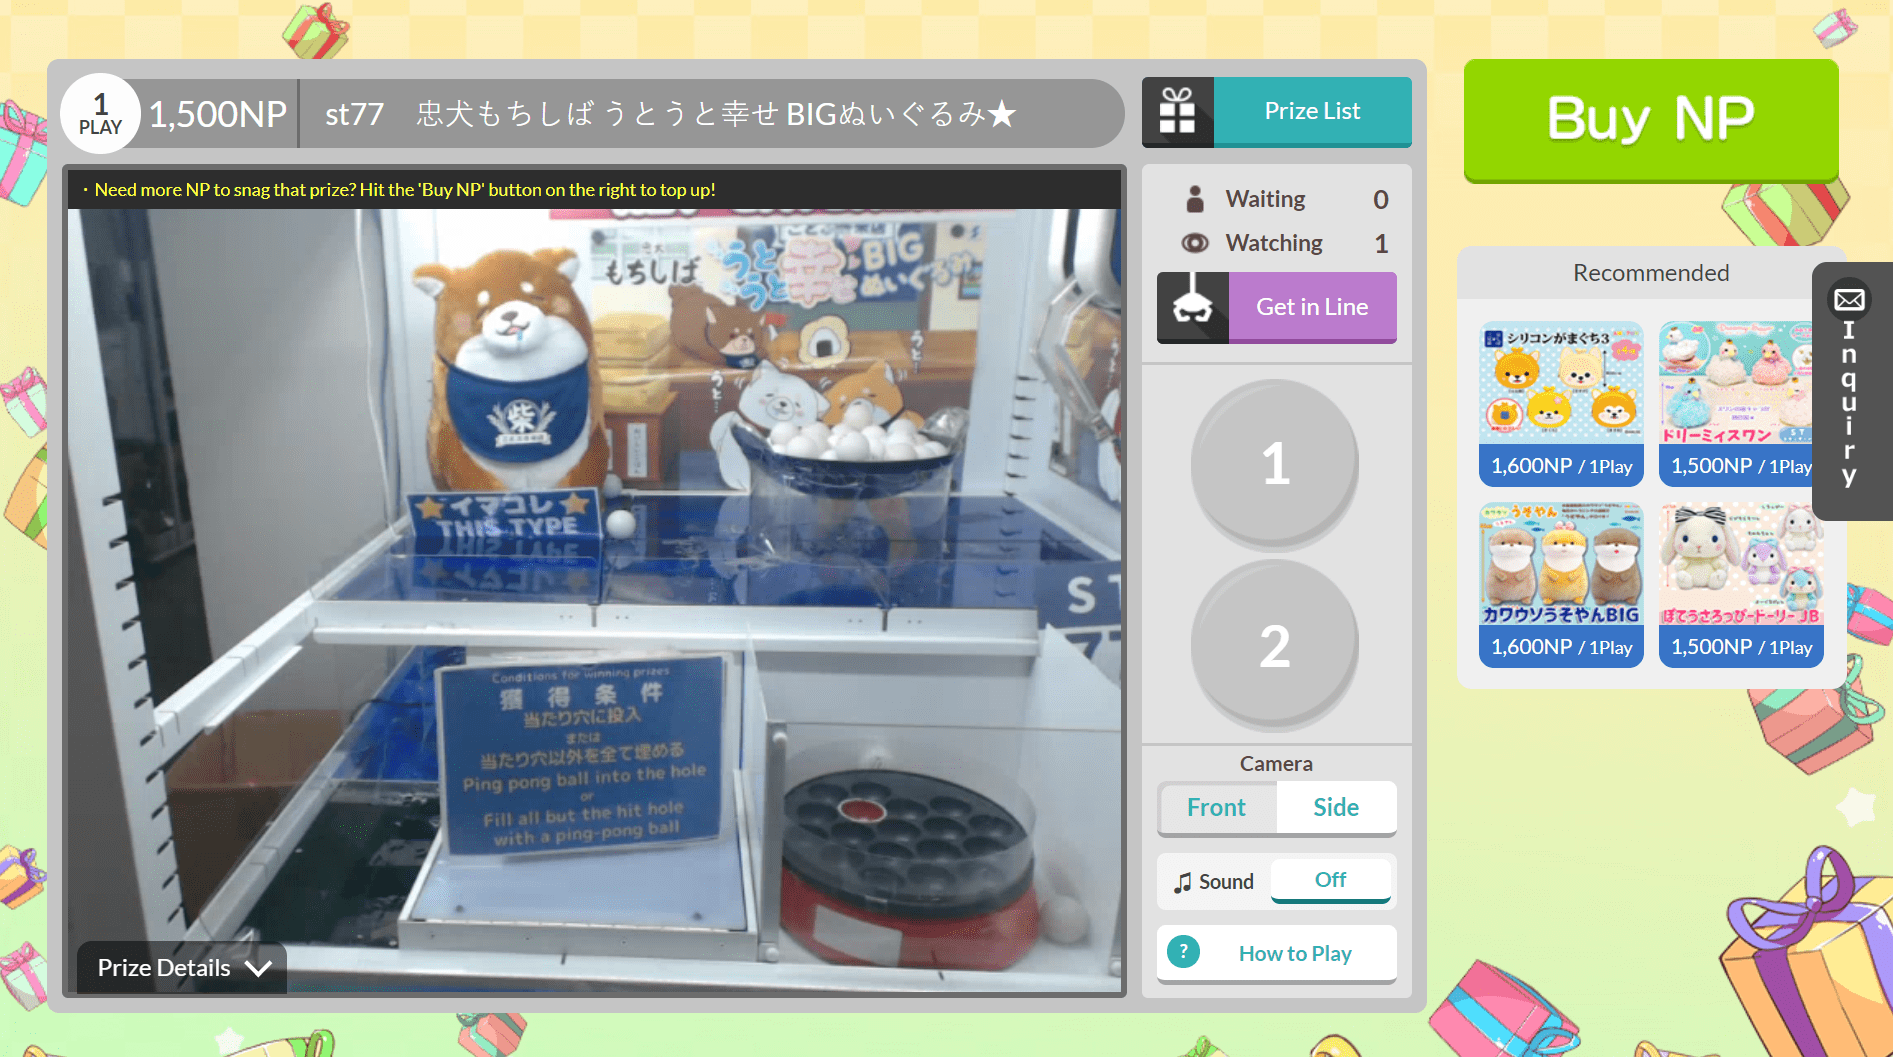 Tokyo Otaku Mode integrates their minigame from a third-party site.